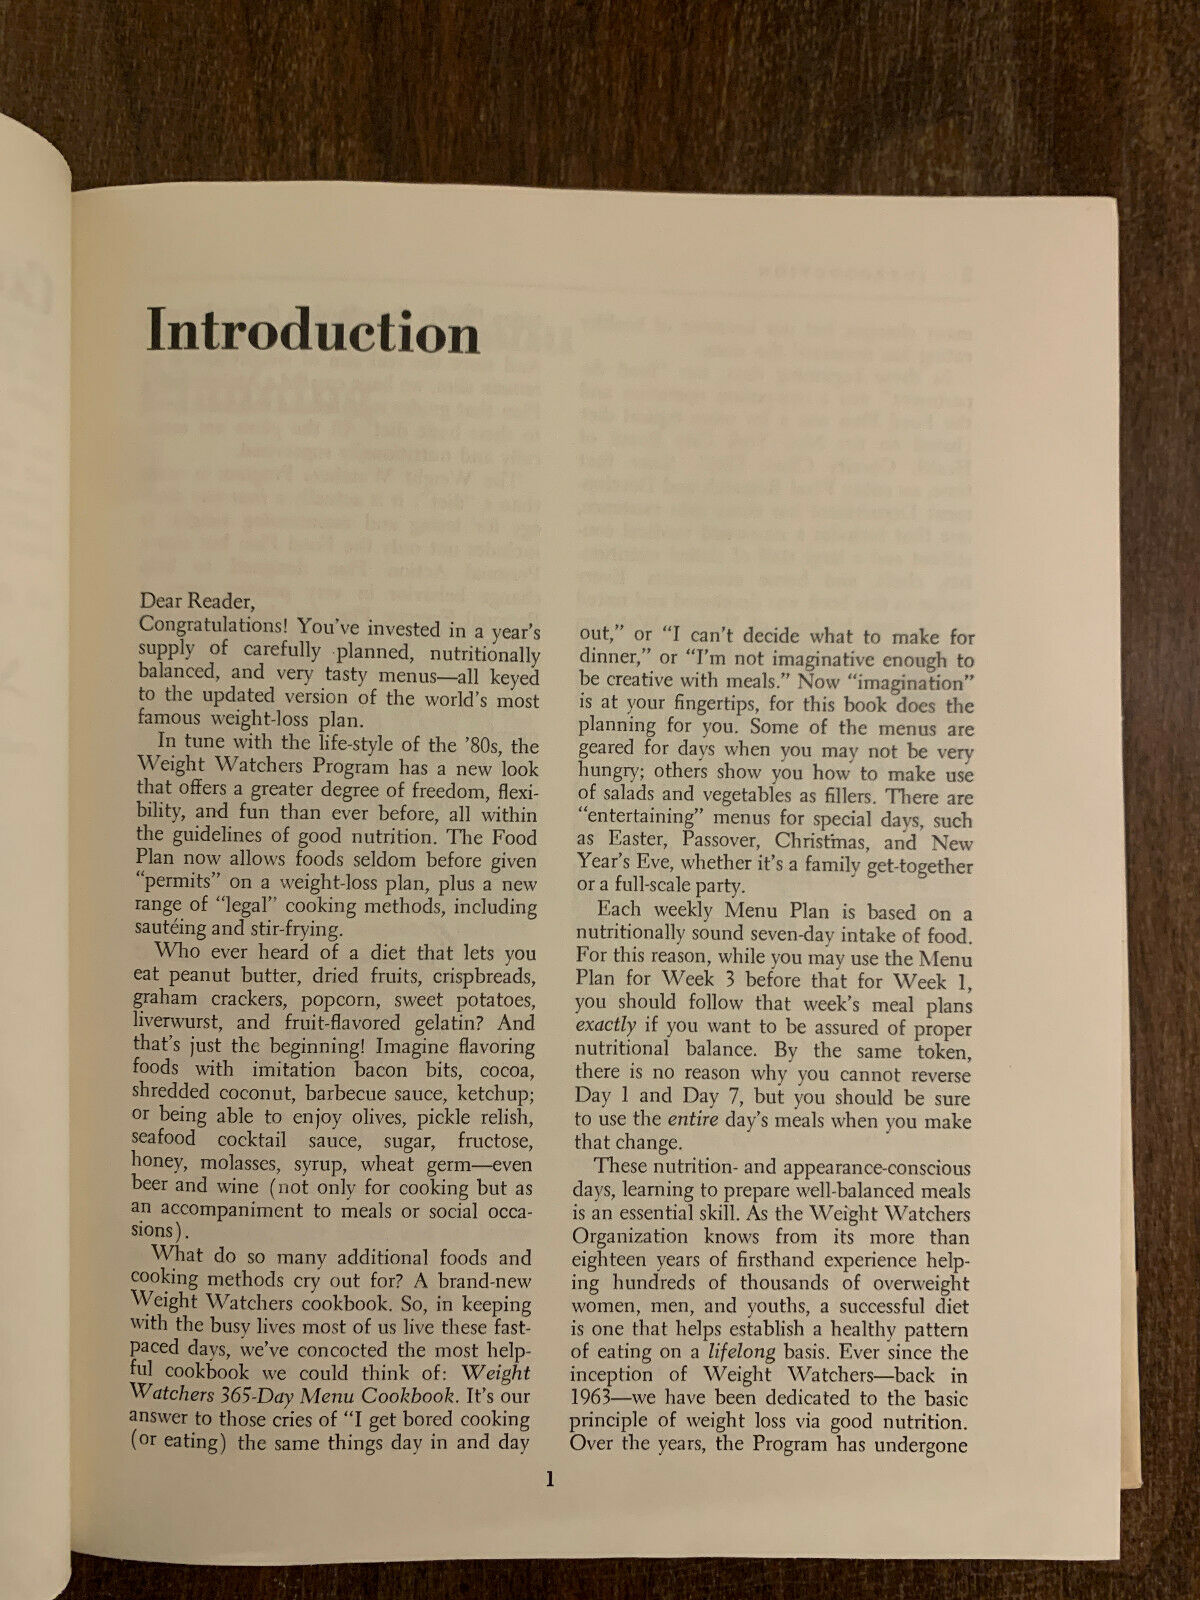 Weight Watchers 365 Day Menu Cookbook by WW Editorial Staff 1st Print 1981 (Q4)